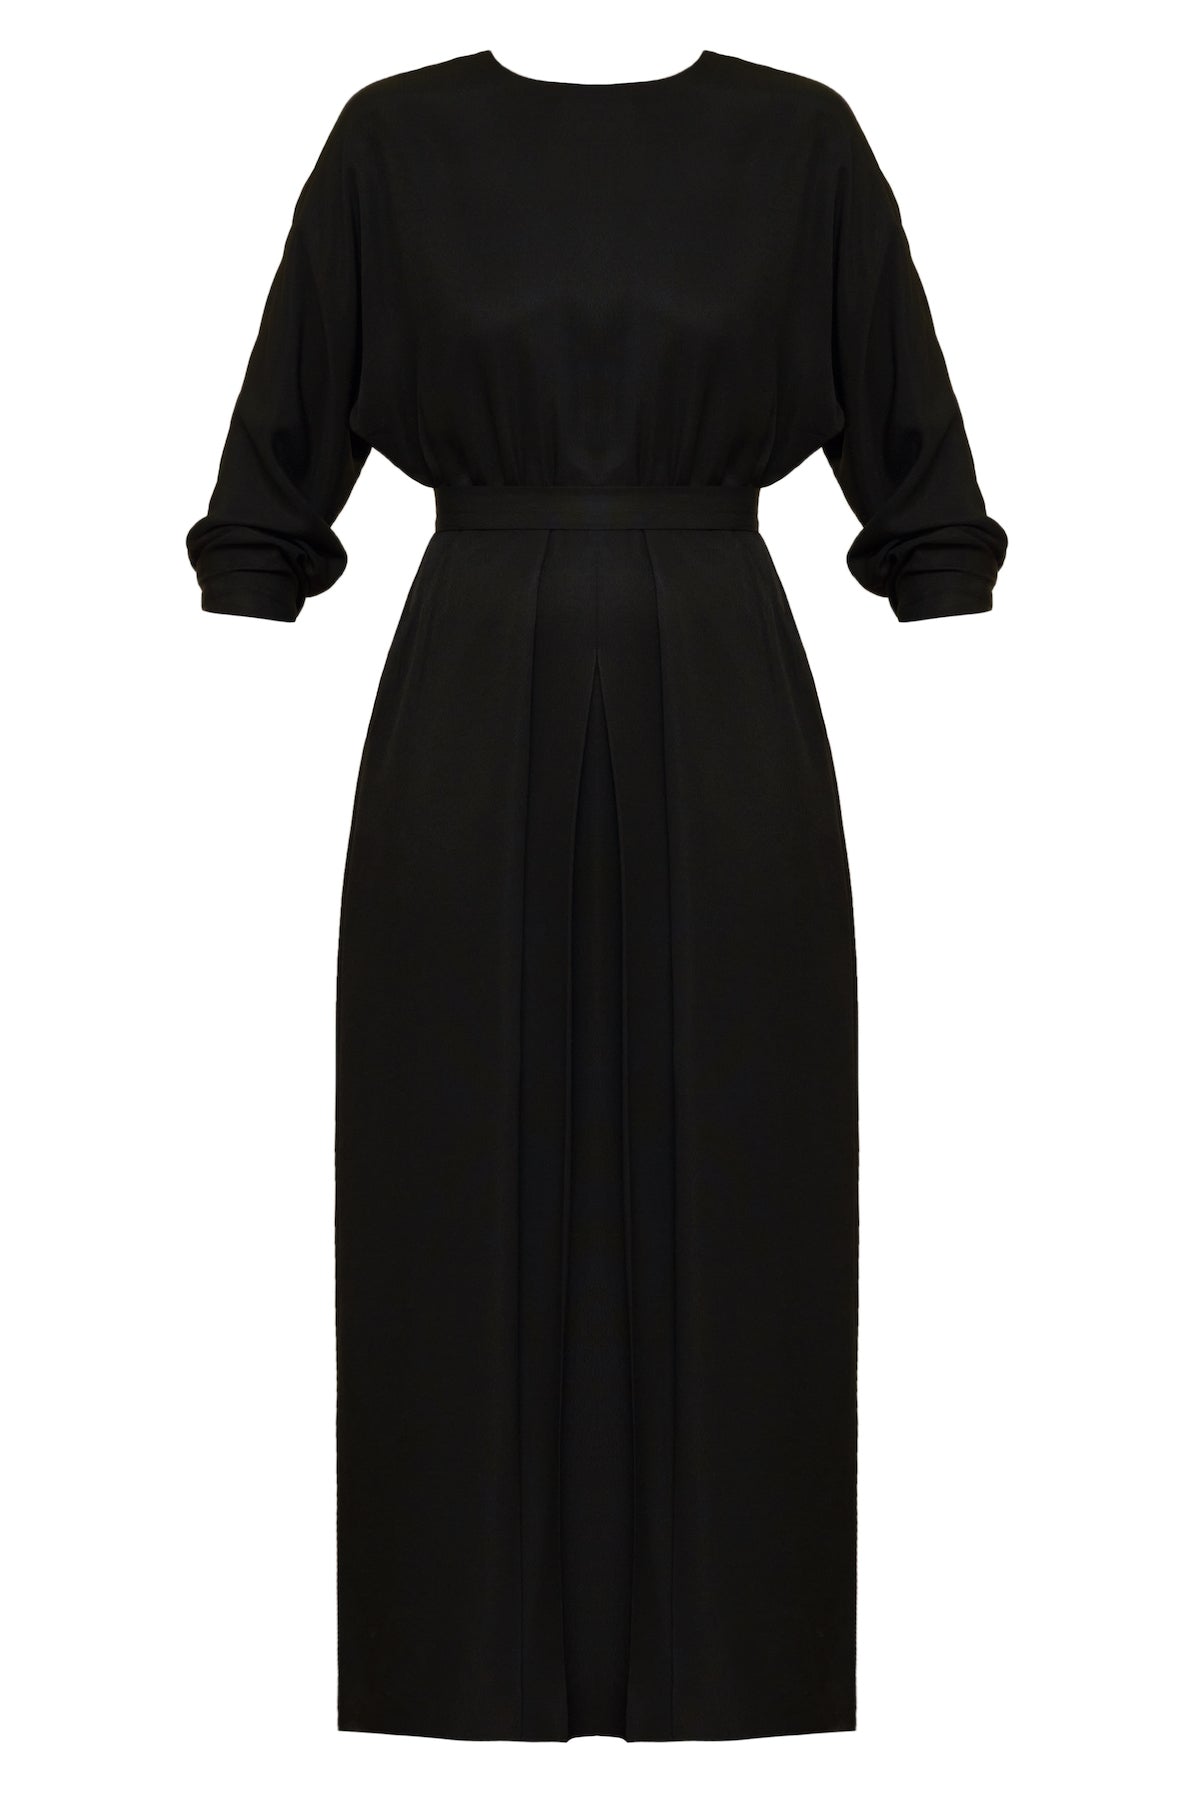 Handmade Black pleated dress with pockets TILDA